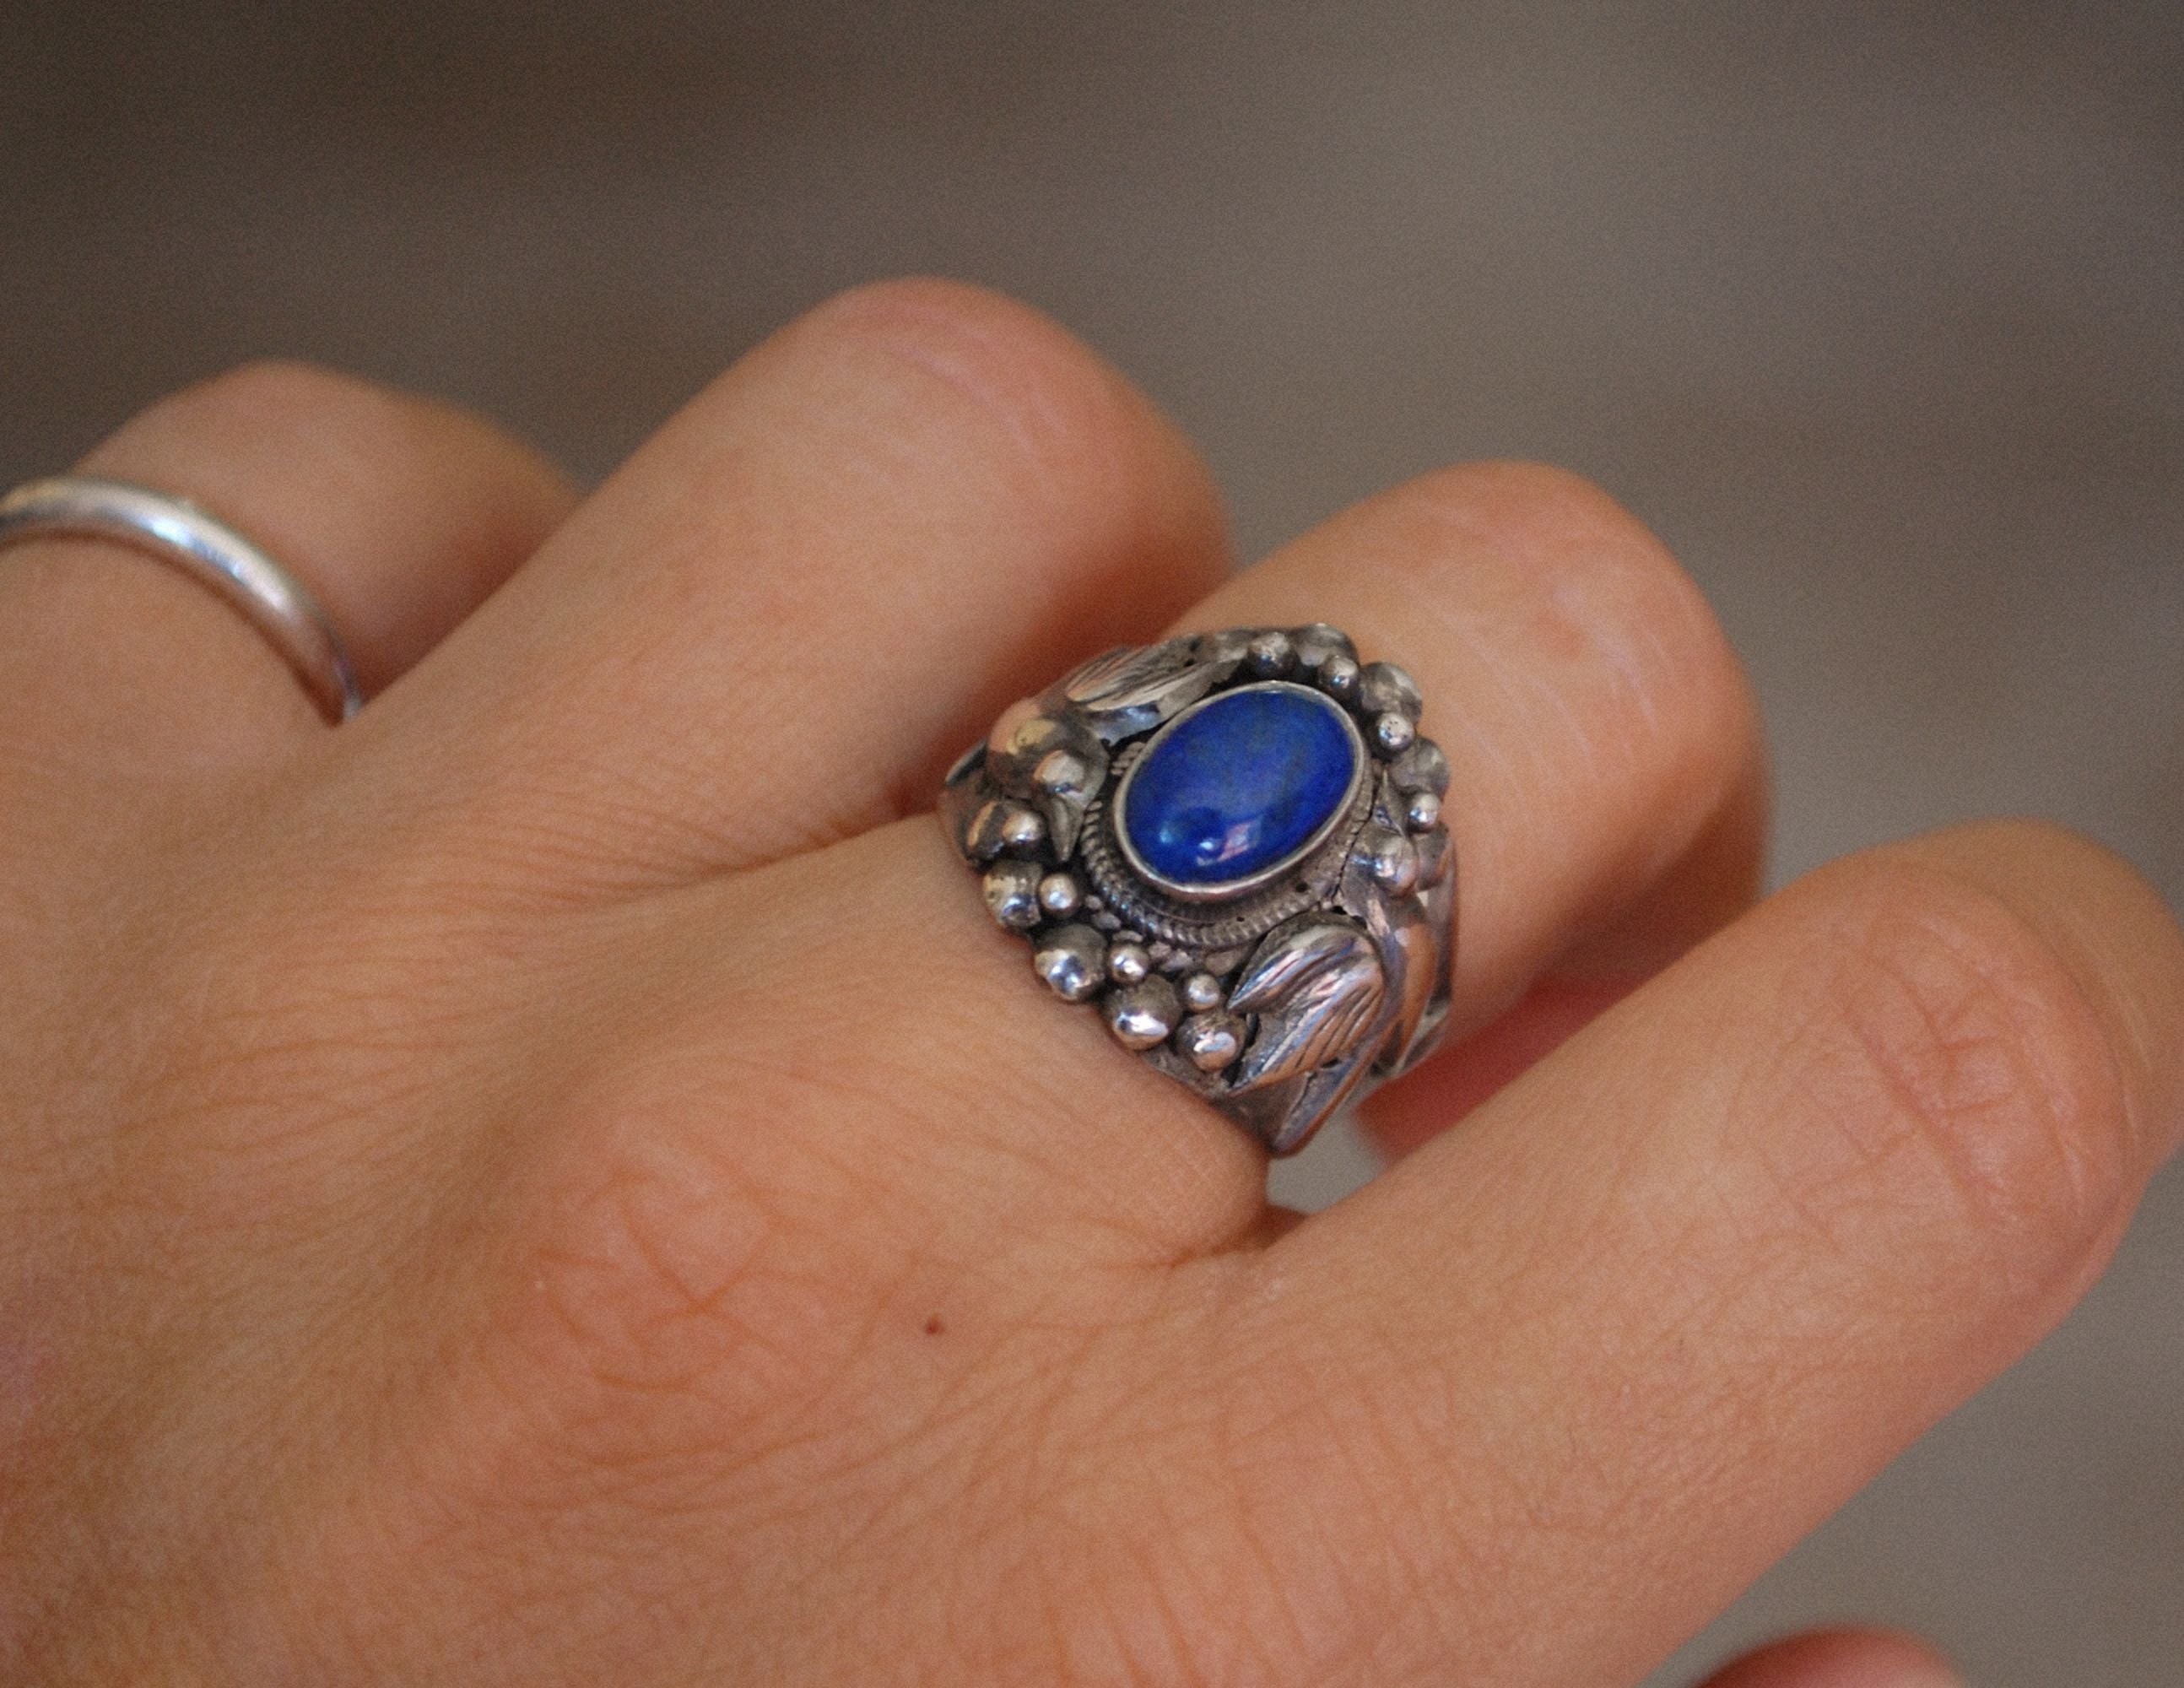 Ethnic Lapis Lazuli Ring from India with Birds - Size 6.75